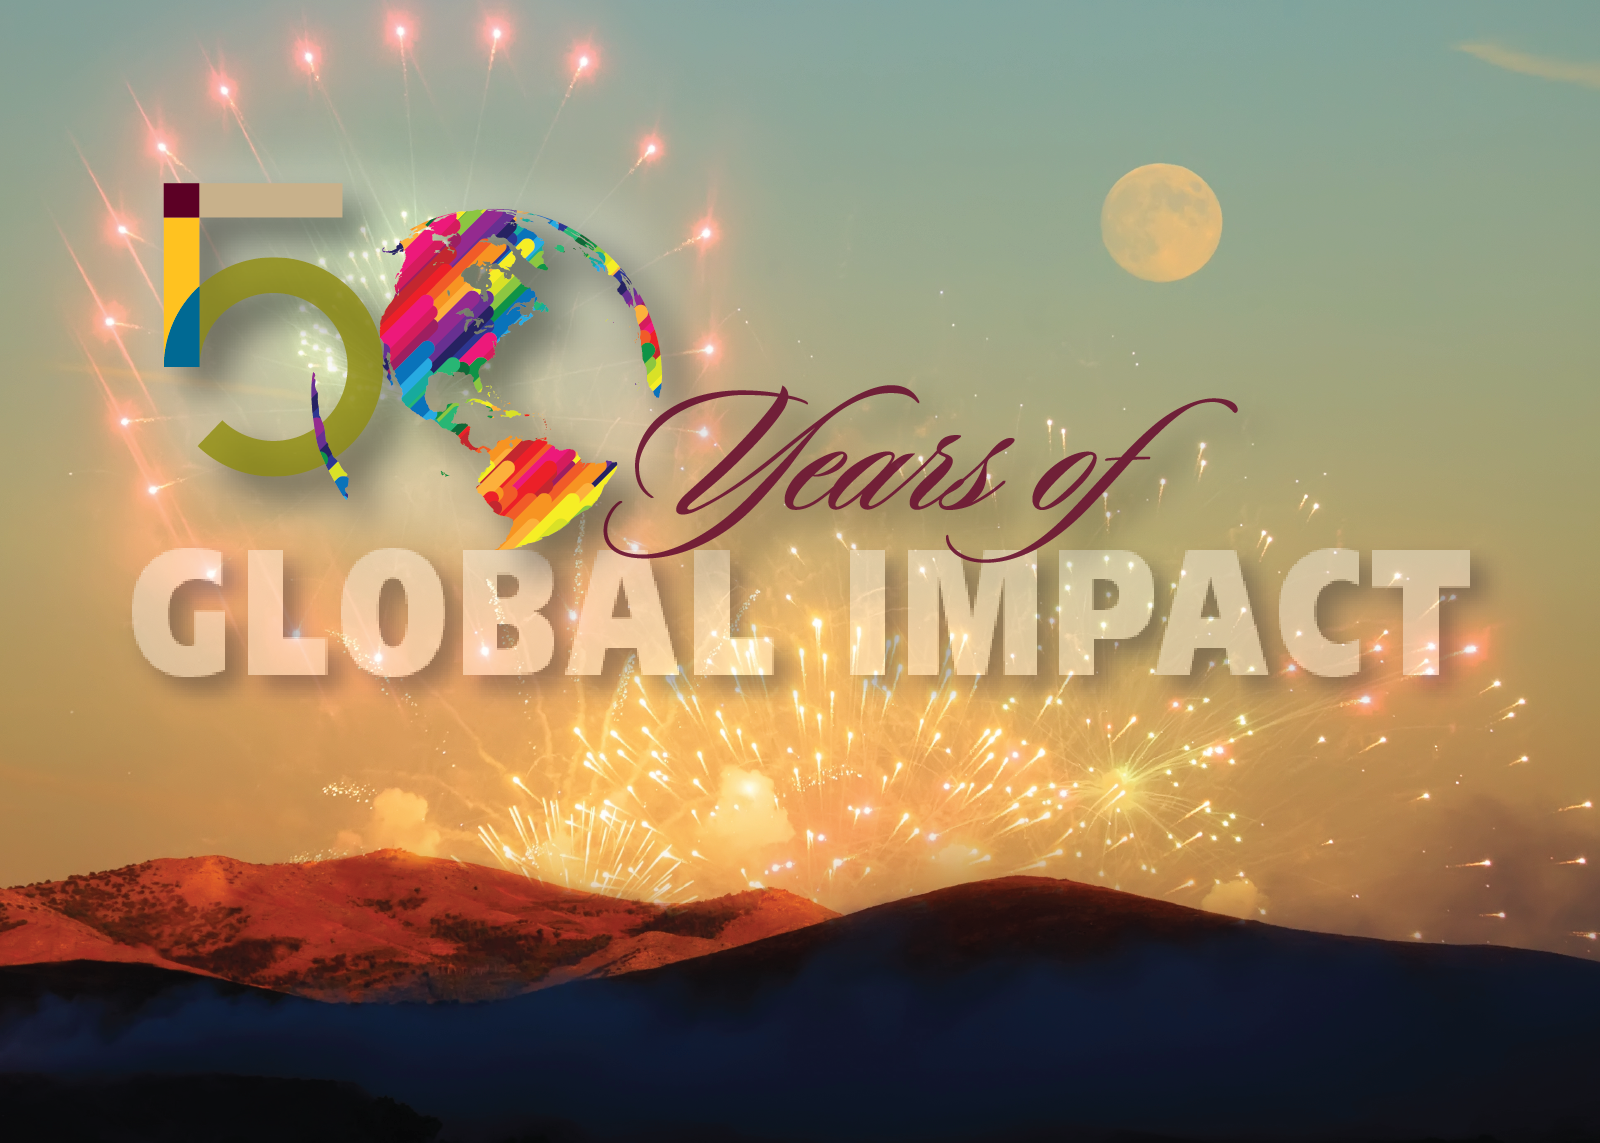 50 Years of Global Impact